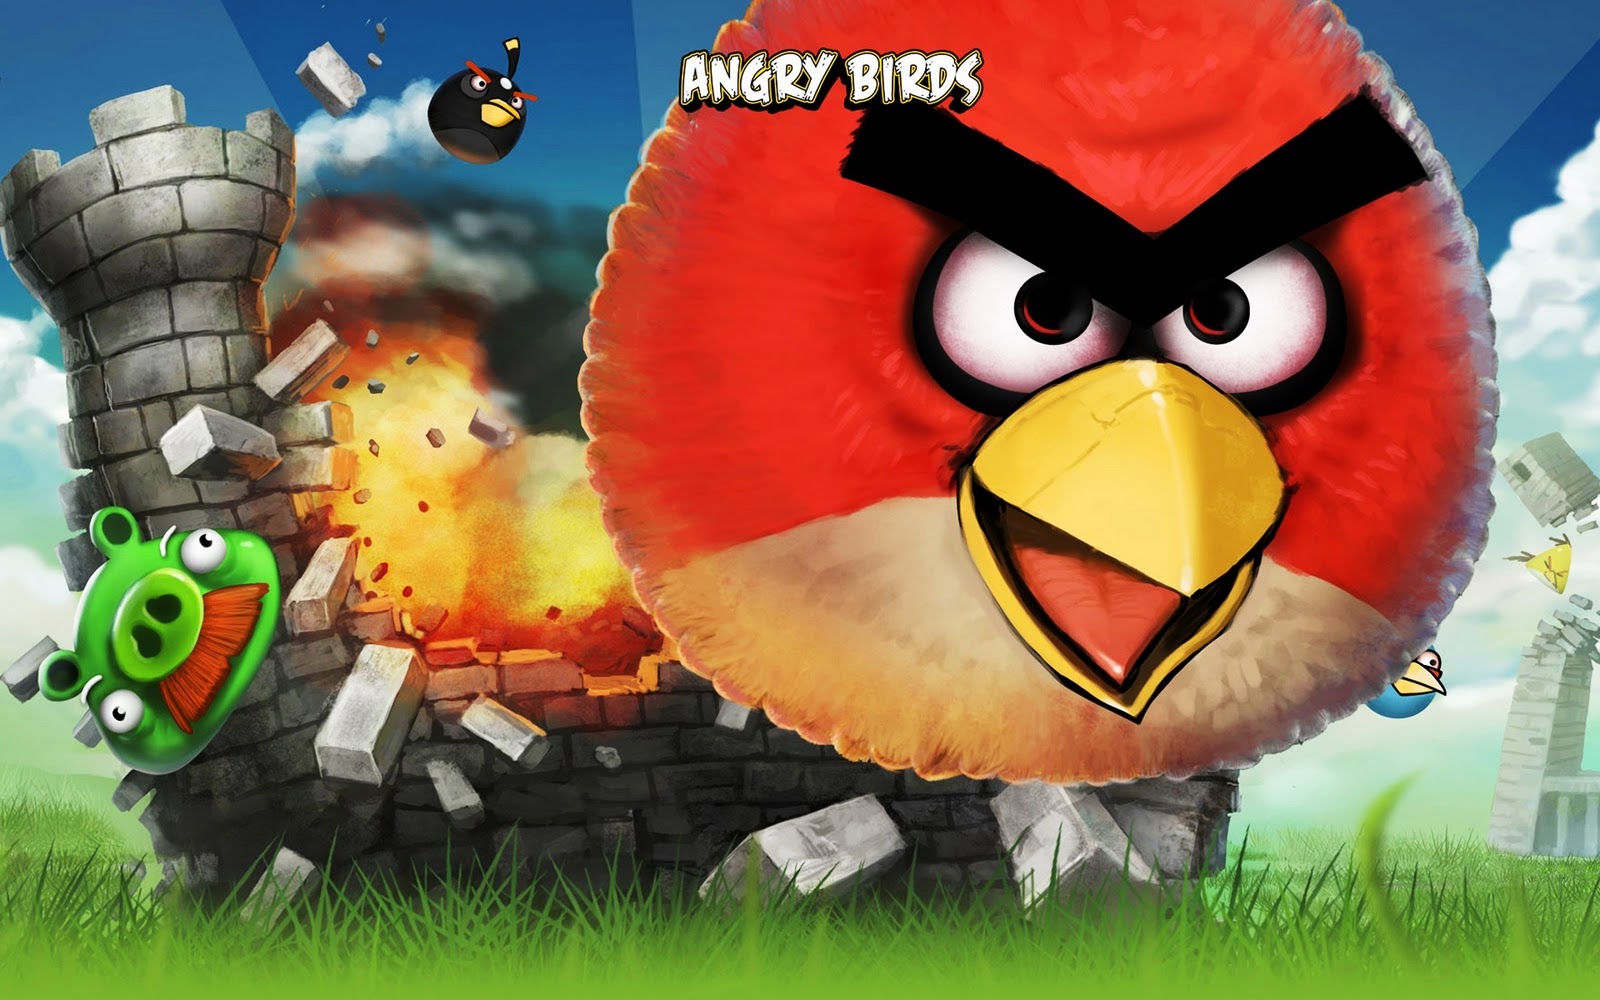 http://1.bp.blogspot.com/-aBqWSIFq9ek/TxjMT9a9bRI/AAAAAAAAFt0/JX0RSgWHnzo/s1600/Angry+Birds+Wallpaper+006.jpg